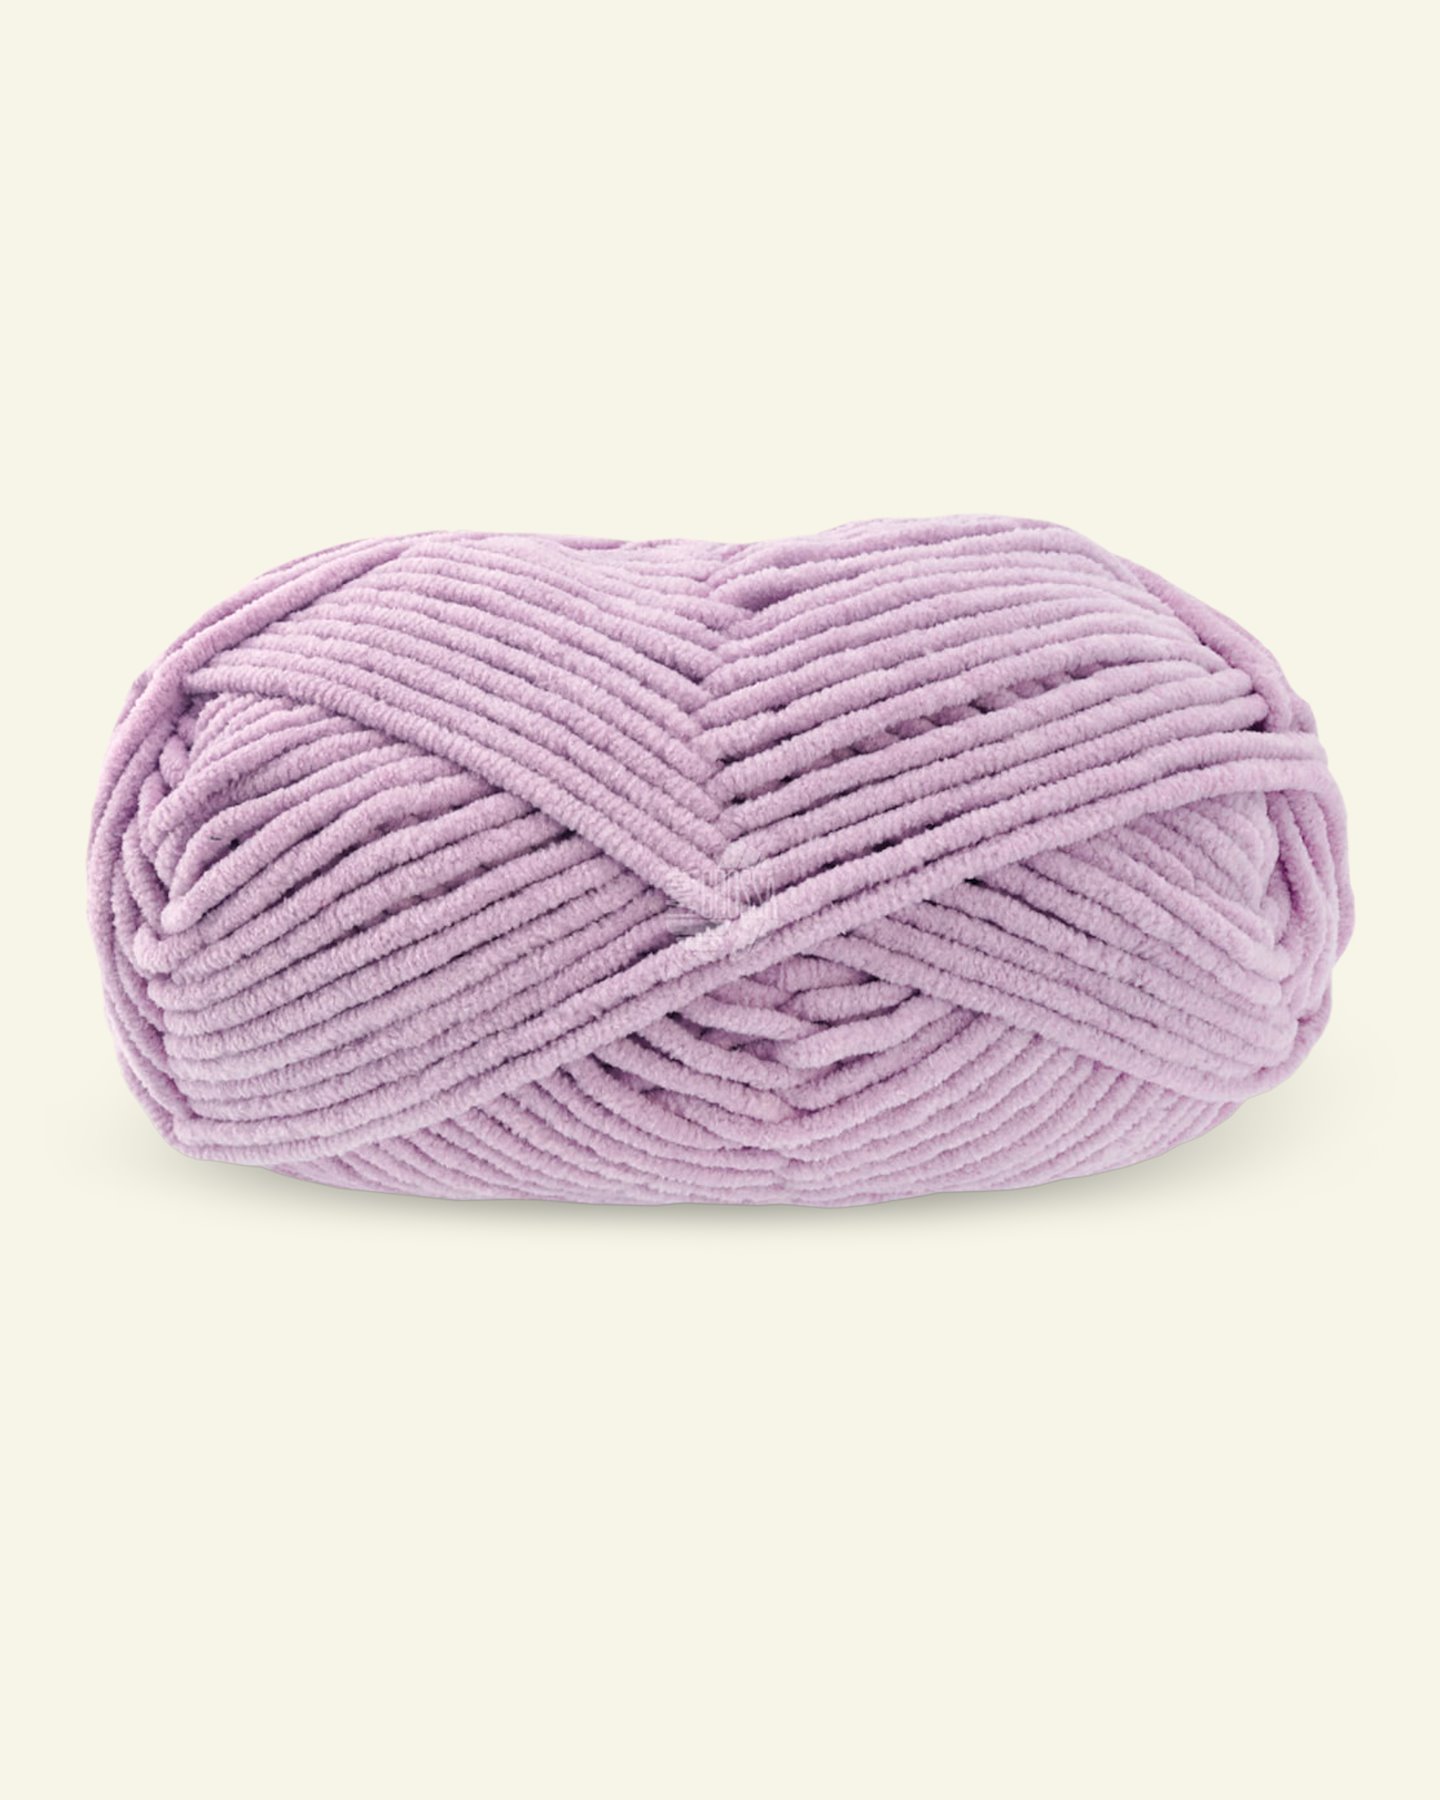 Lana Grossa, polyester yarn / velour yarn "The Look", violet 90001136_pack